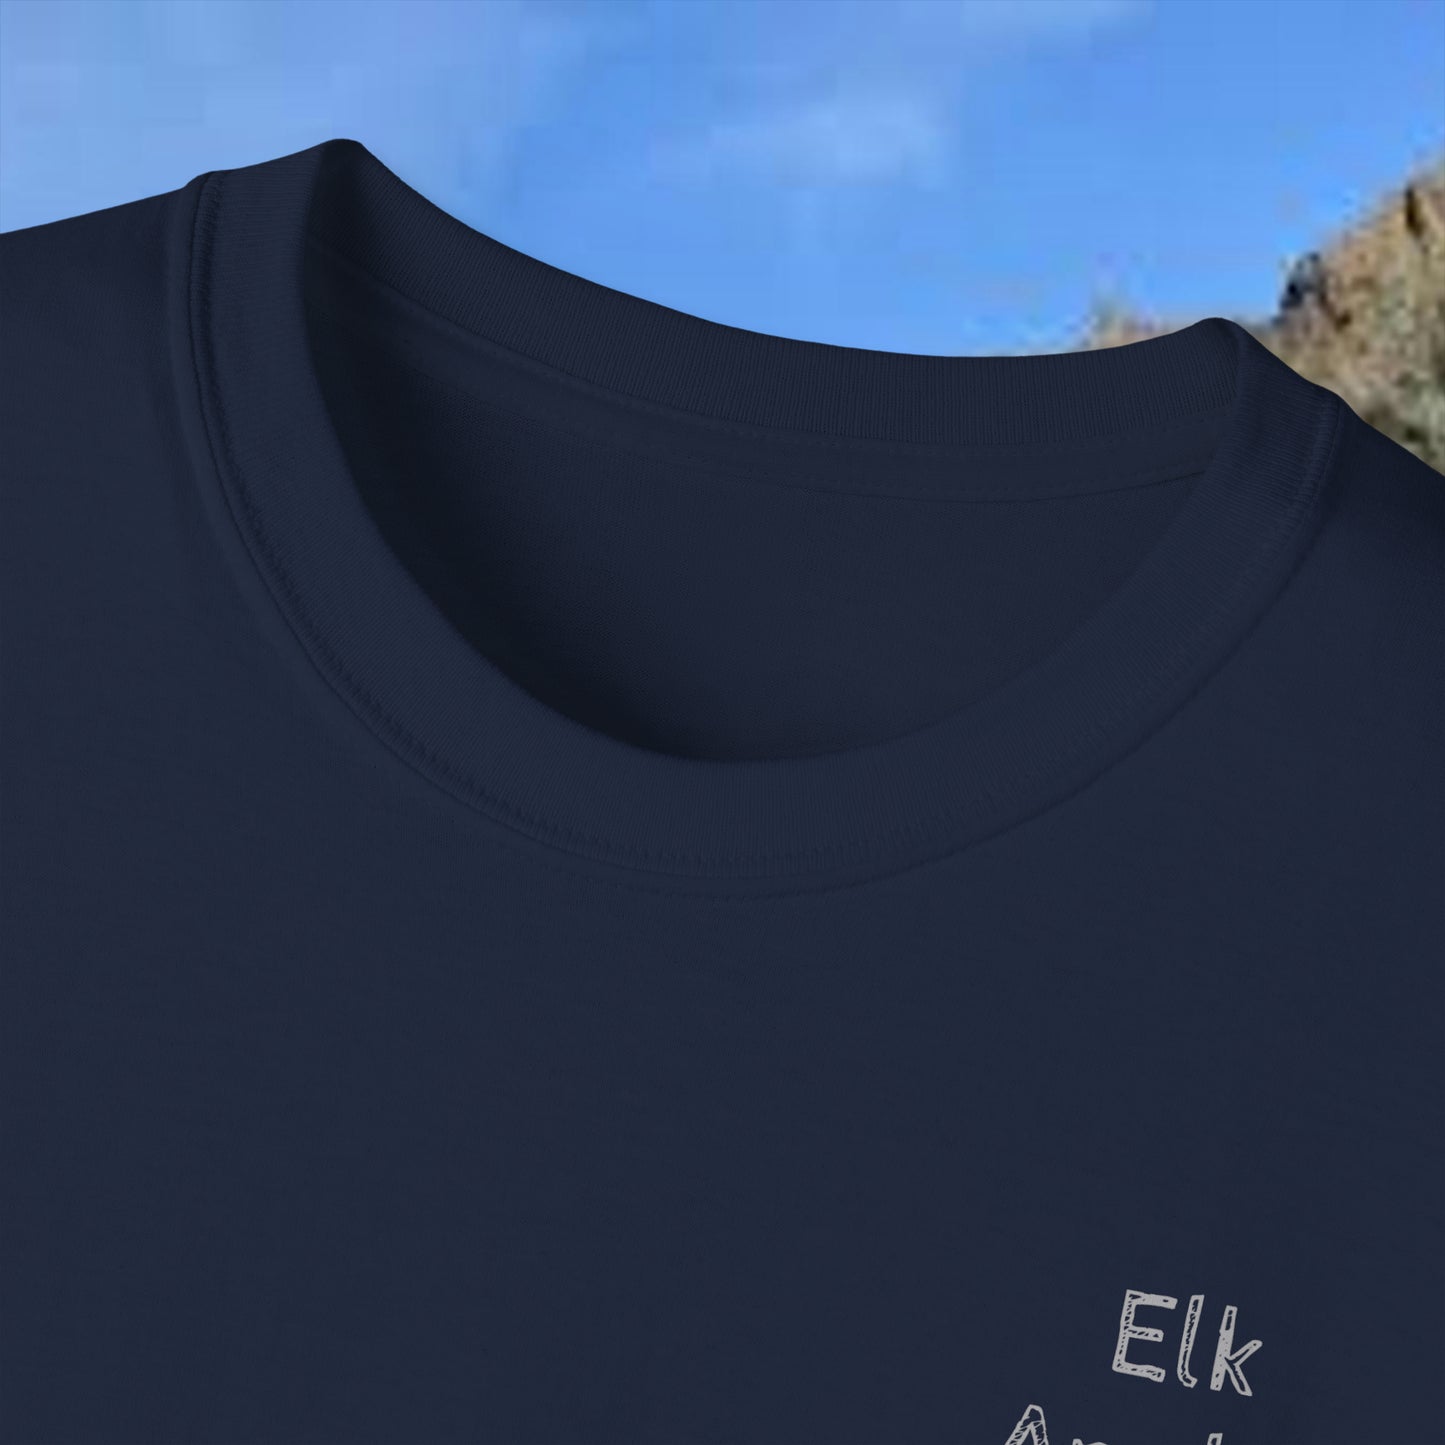 American Flag Shirt, Elk Angler Flag Shirt